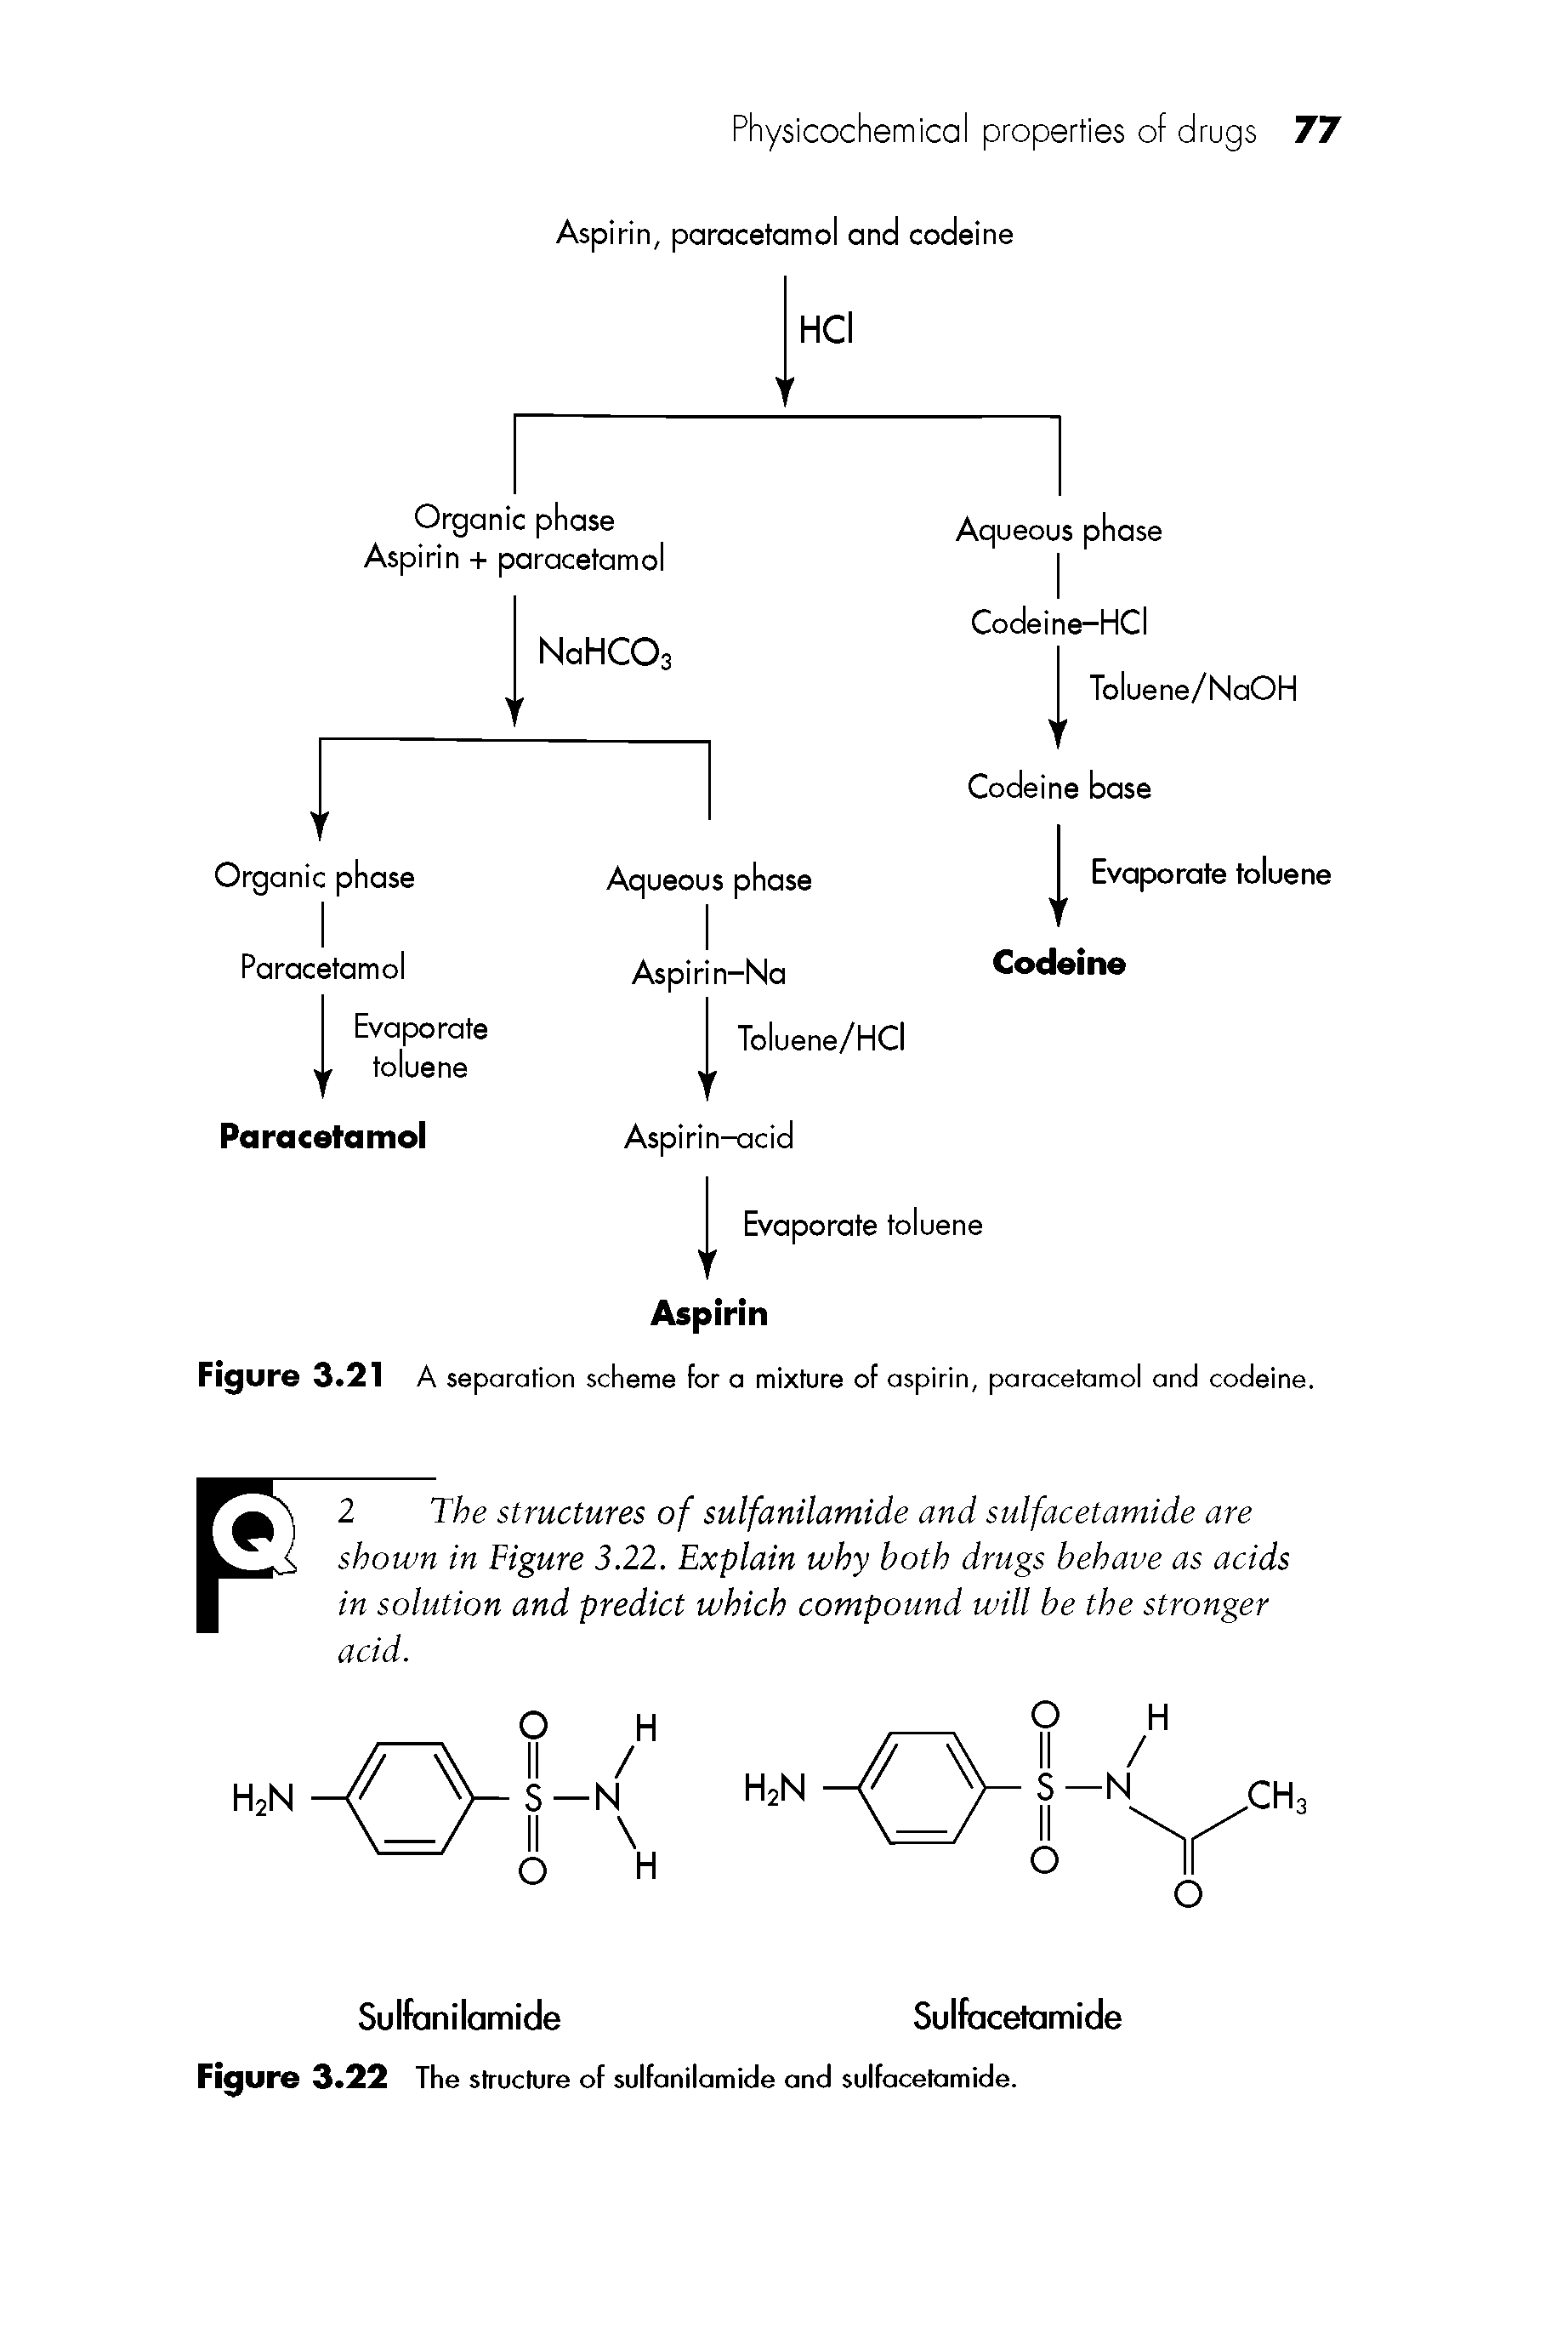 Figure 3.21 A separation scheme for a mixture of aspirin, paracetamol and codeine.